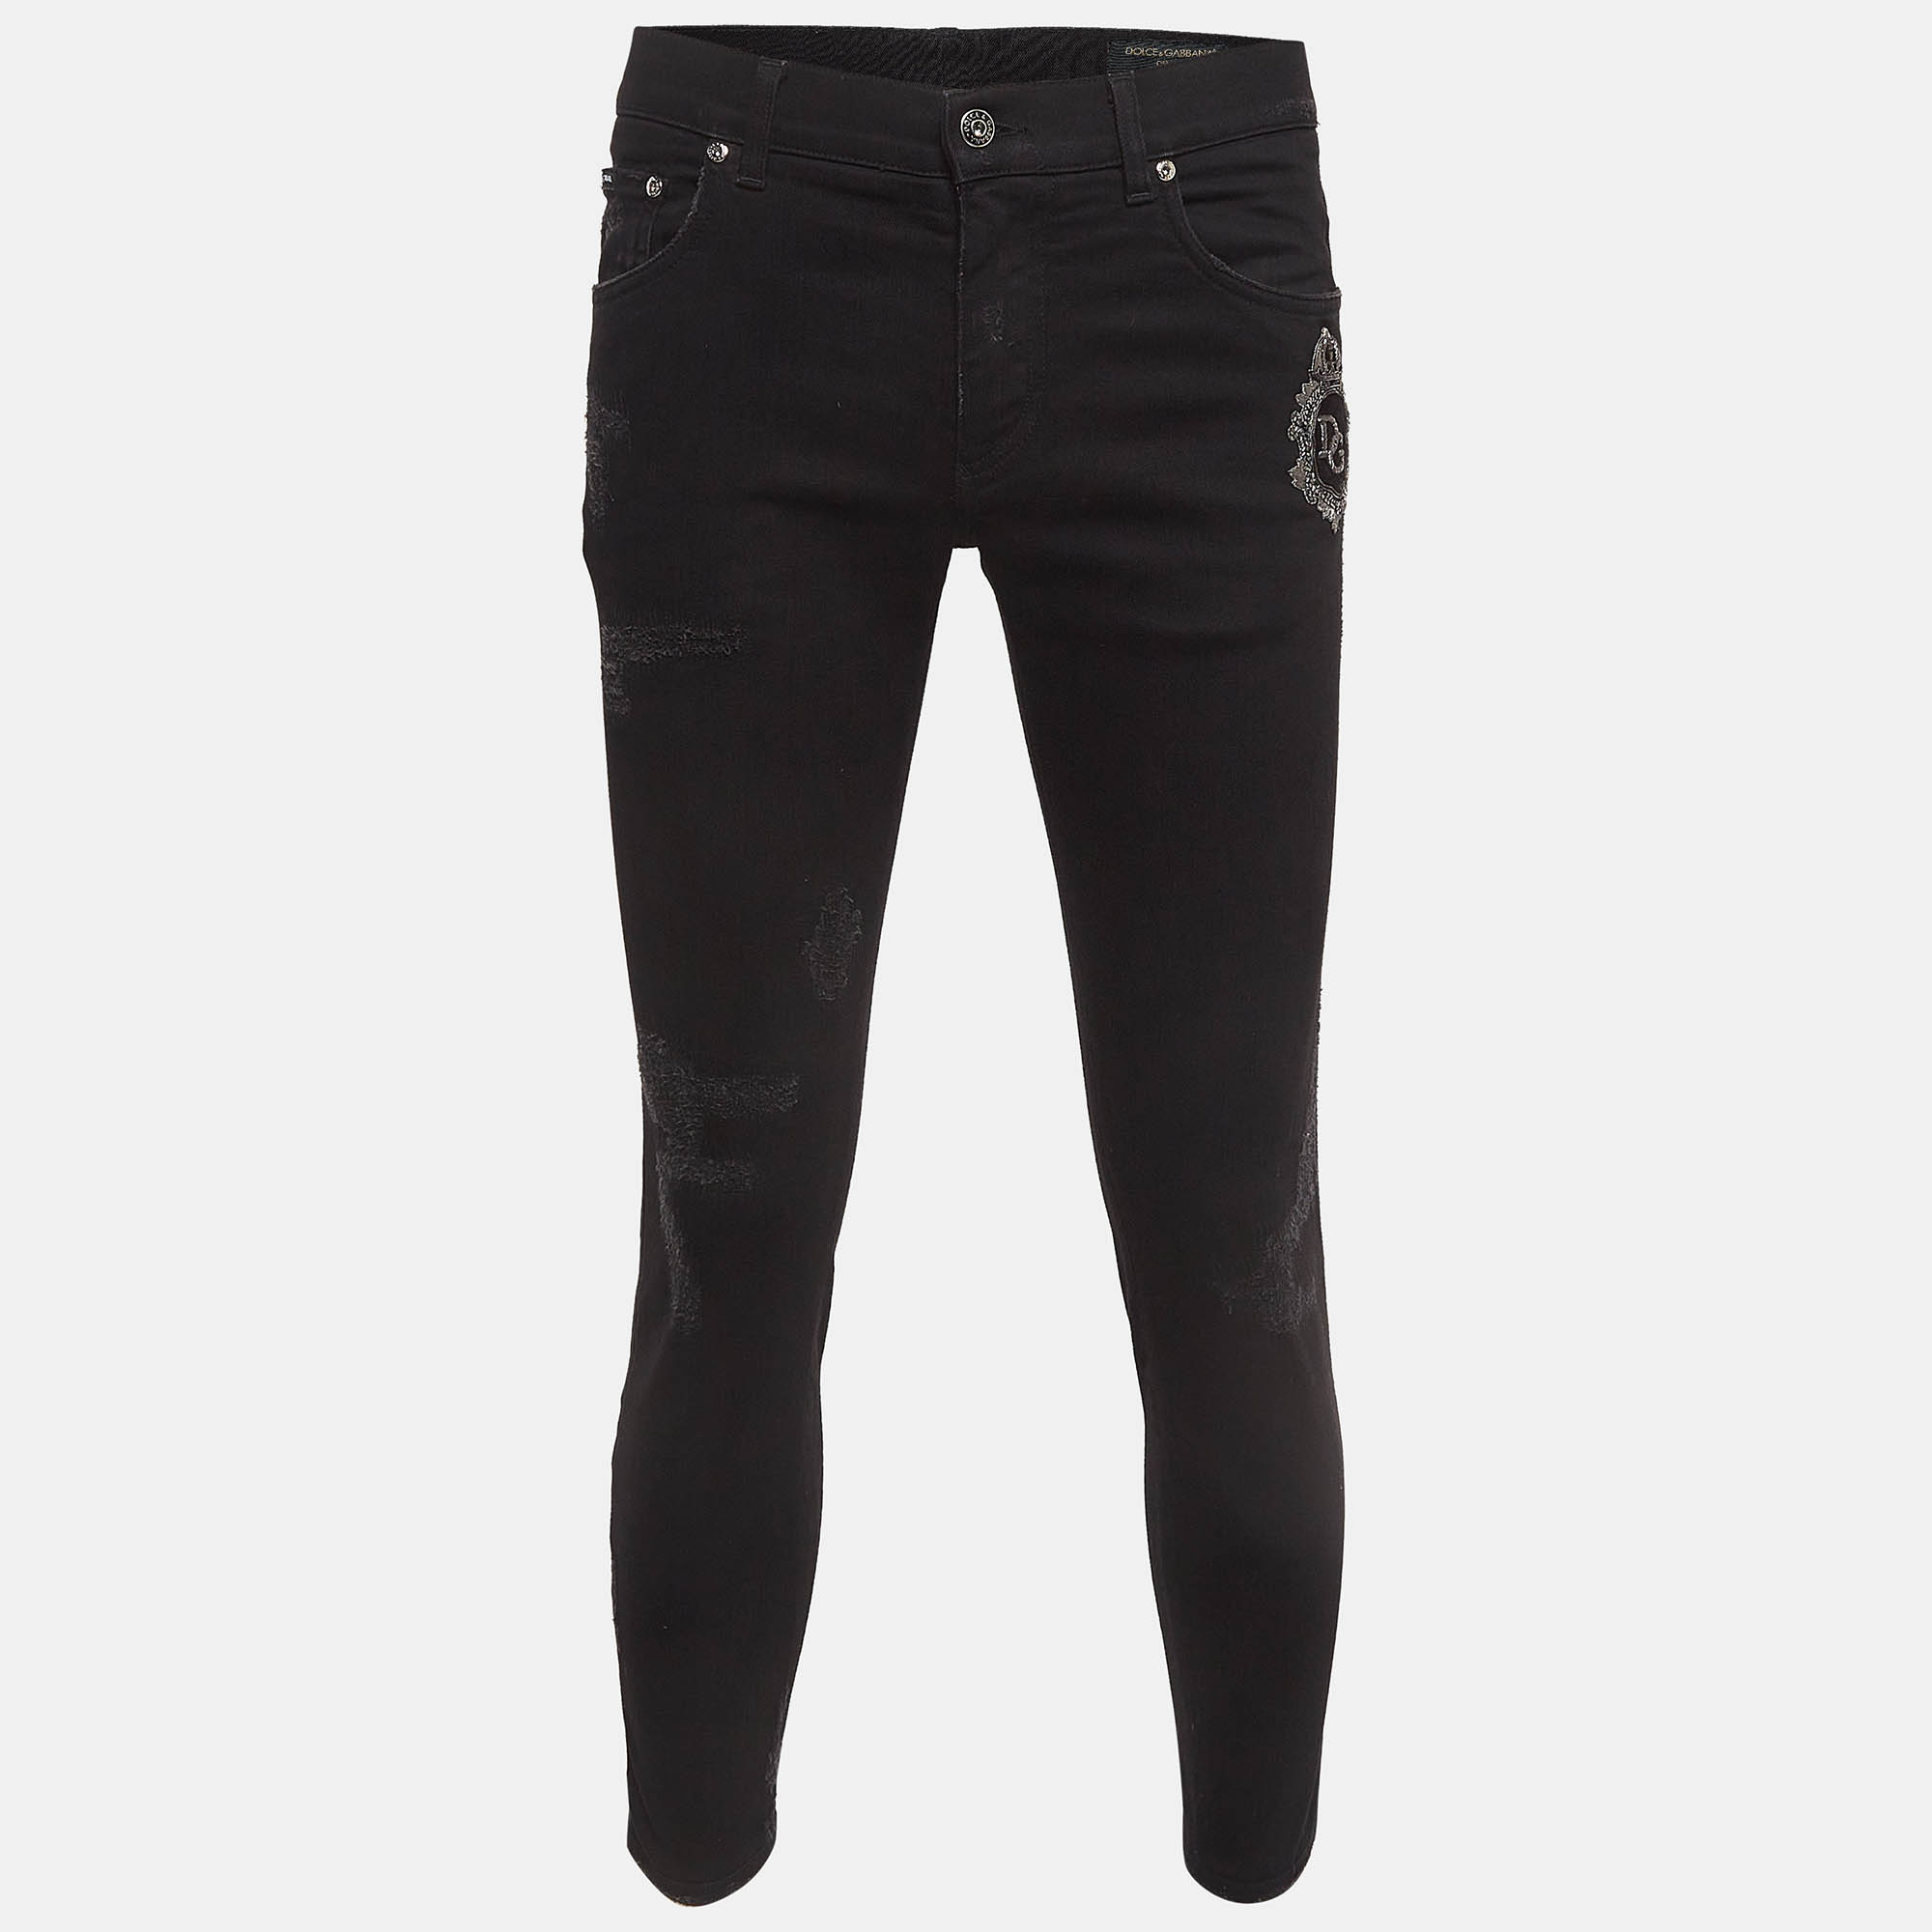 Dolce & gabbana black distressed denim jeans m waist 32"